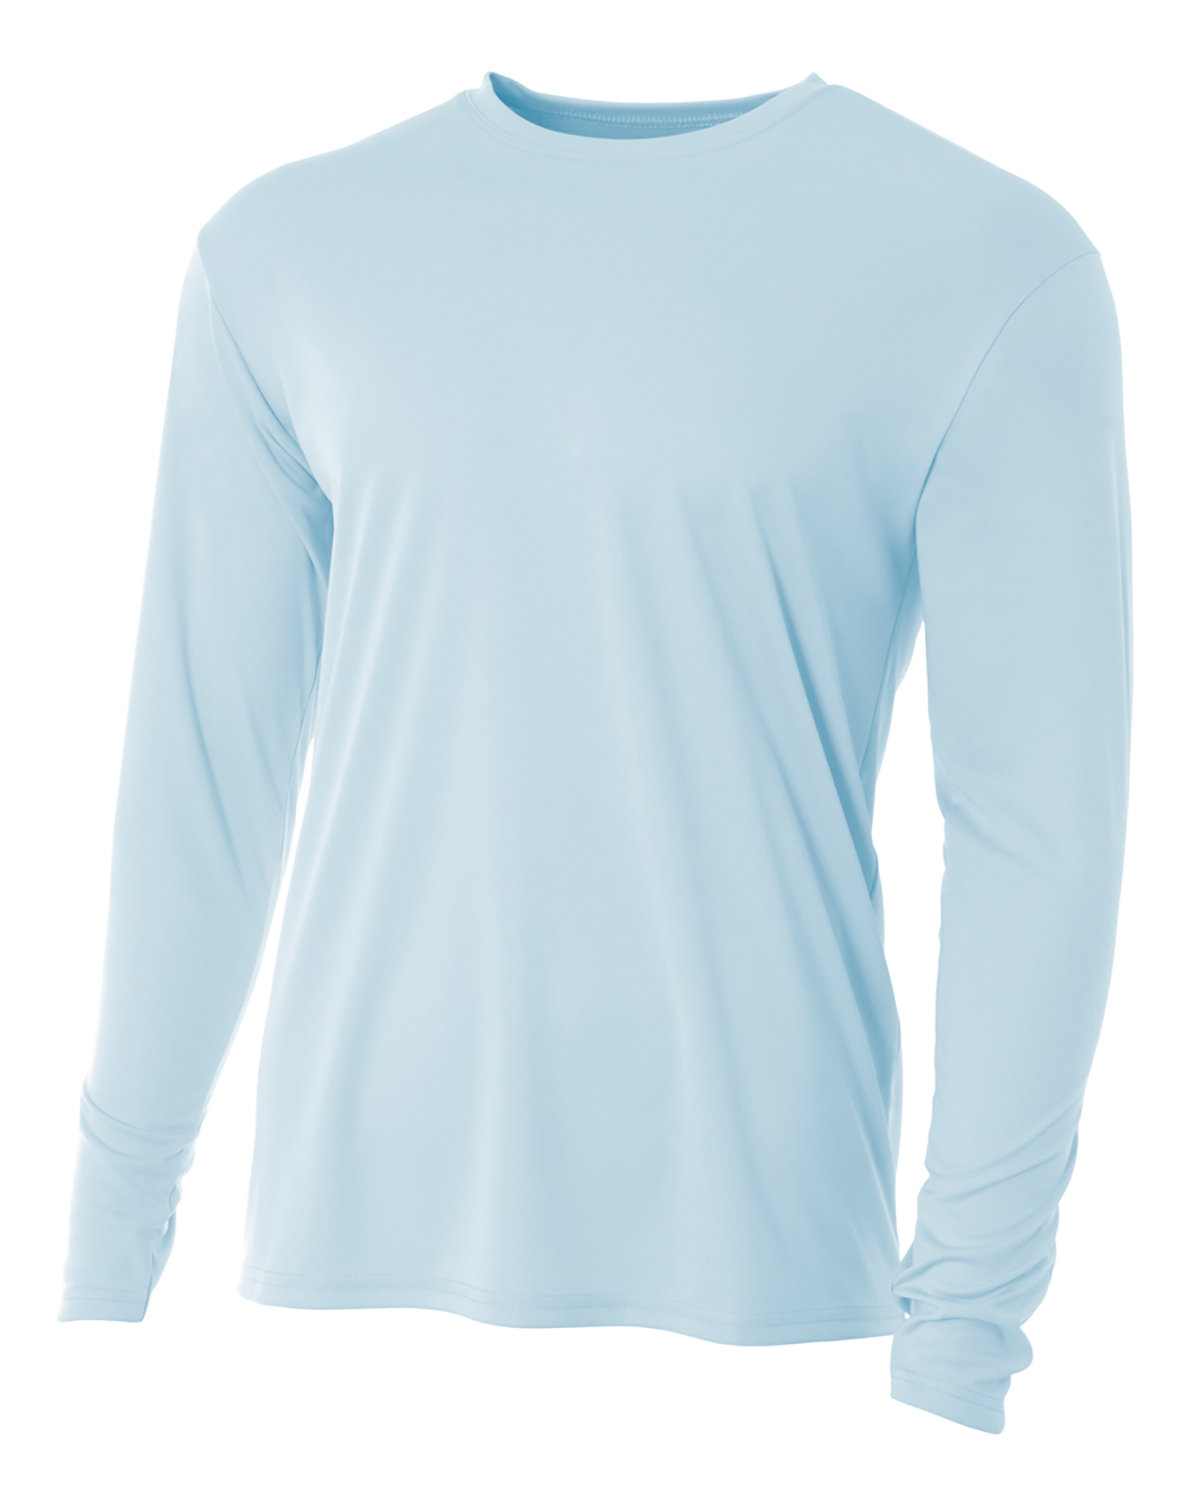 A4 Men's Cooling Performance Long Sleeve T-Shirt PASTEL BLUE 